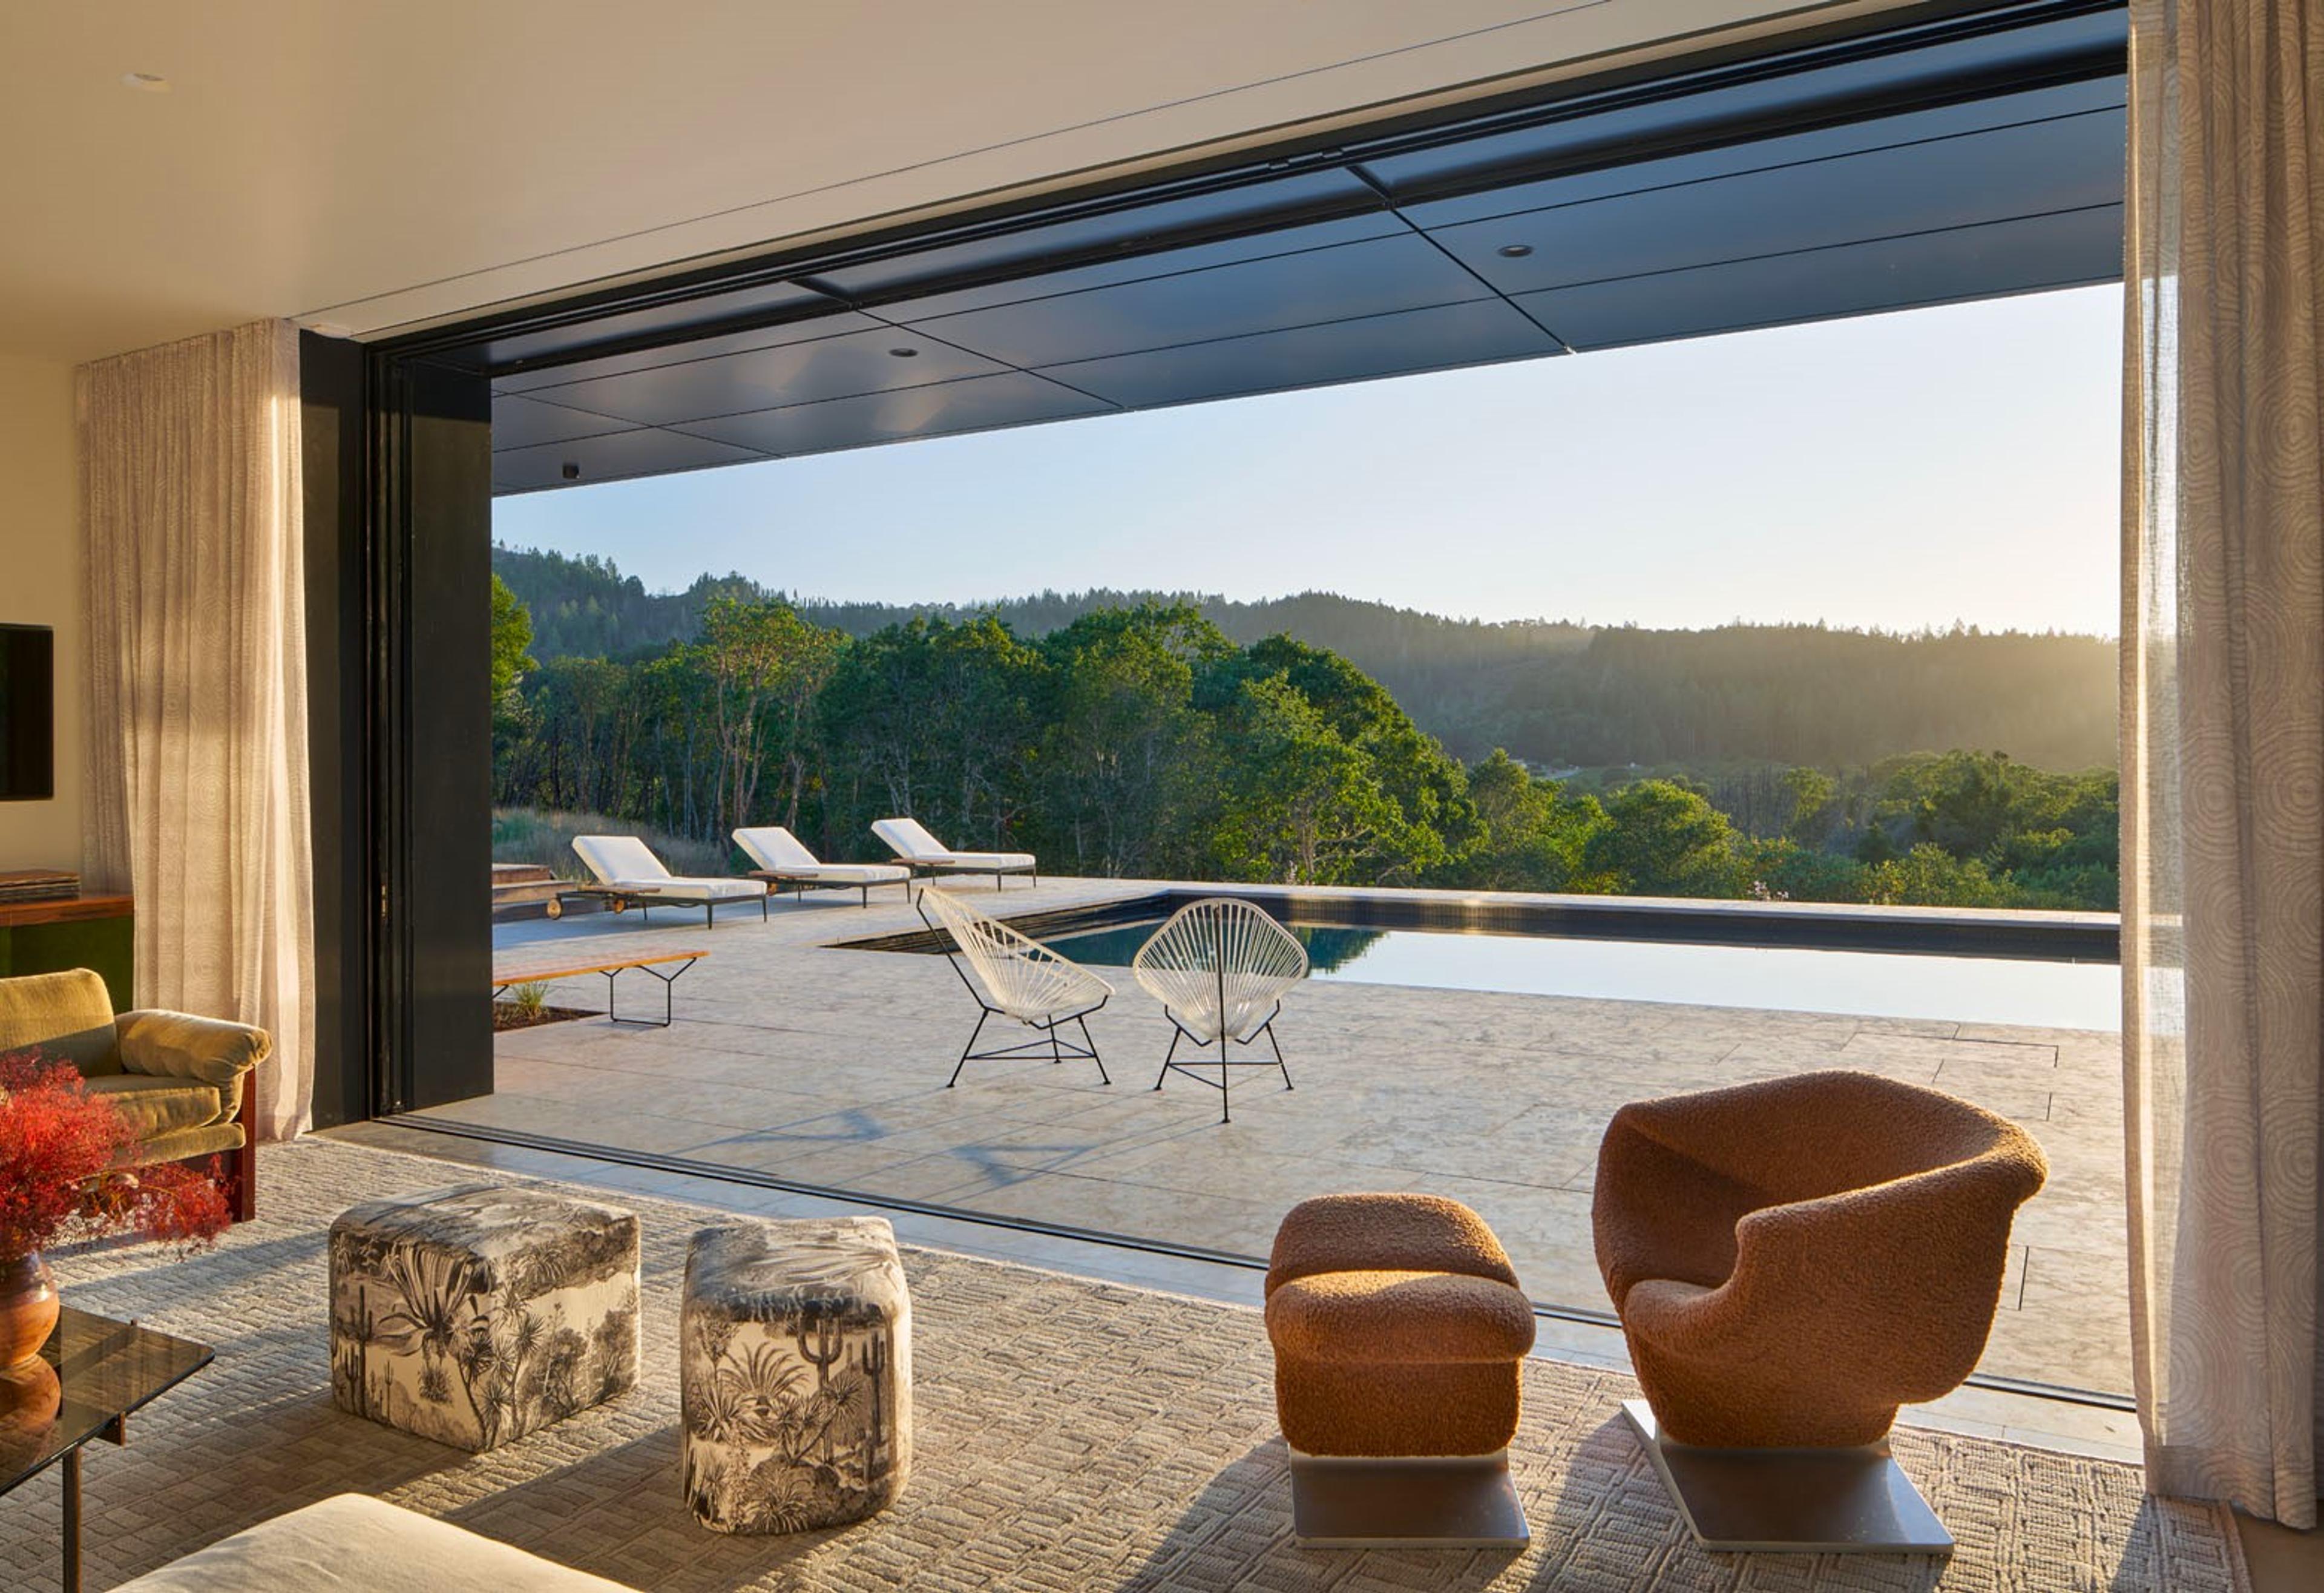 Living Room overlooking the pool, Calistoga Residence, California ©Bruce Damonte